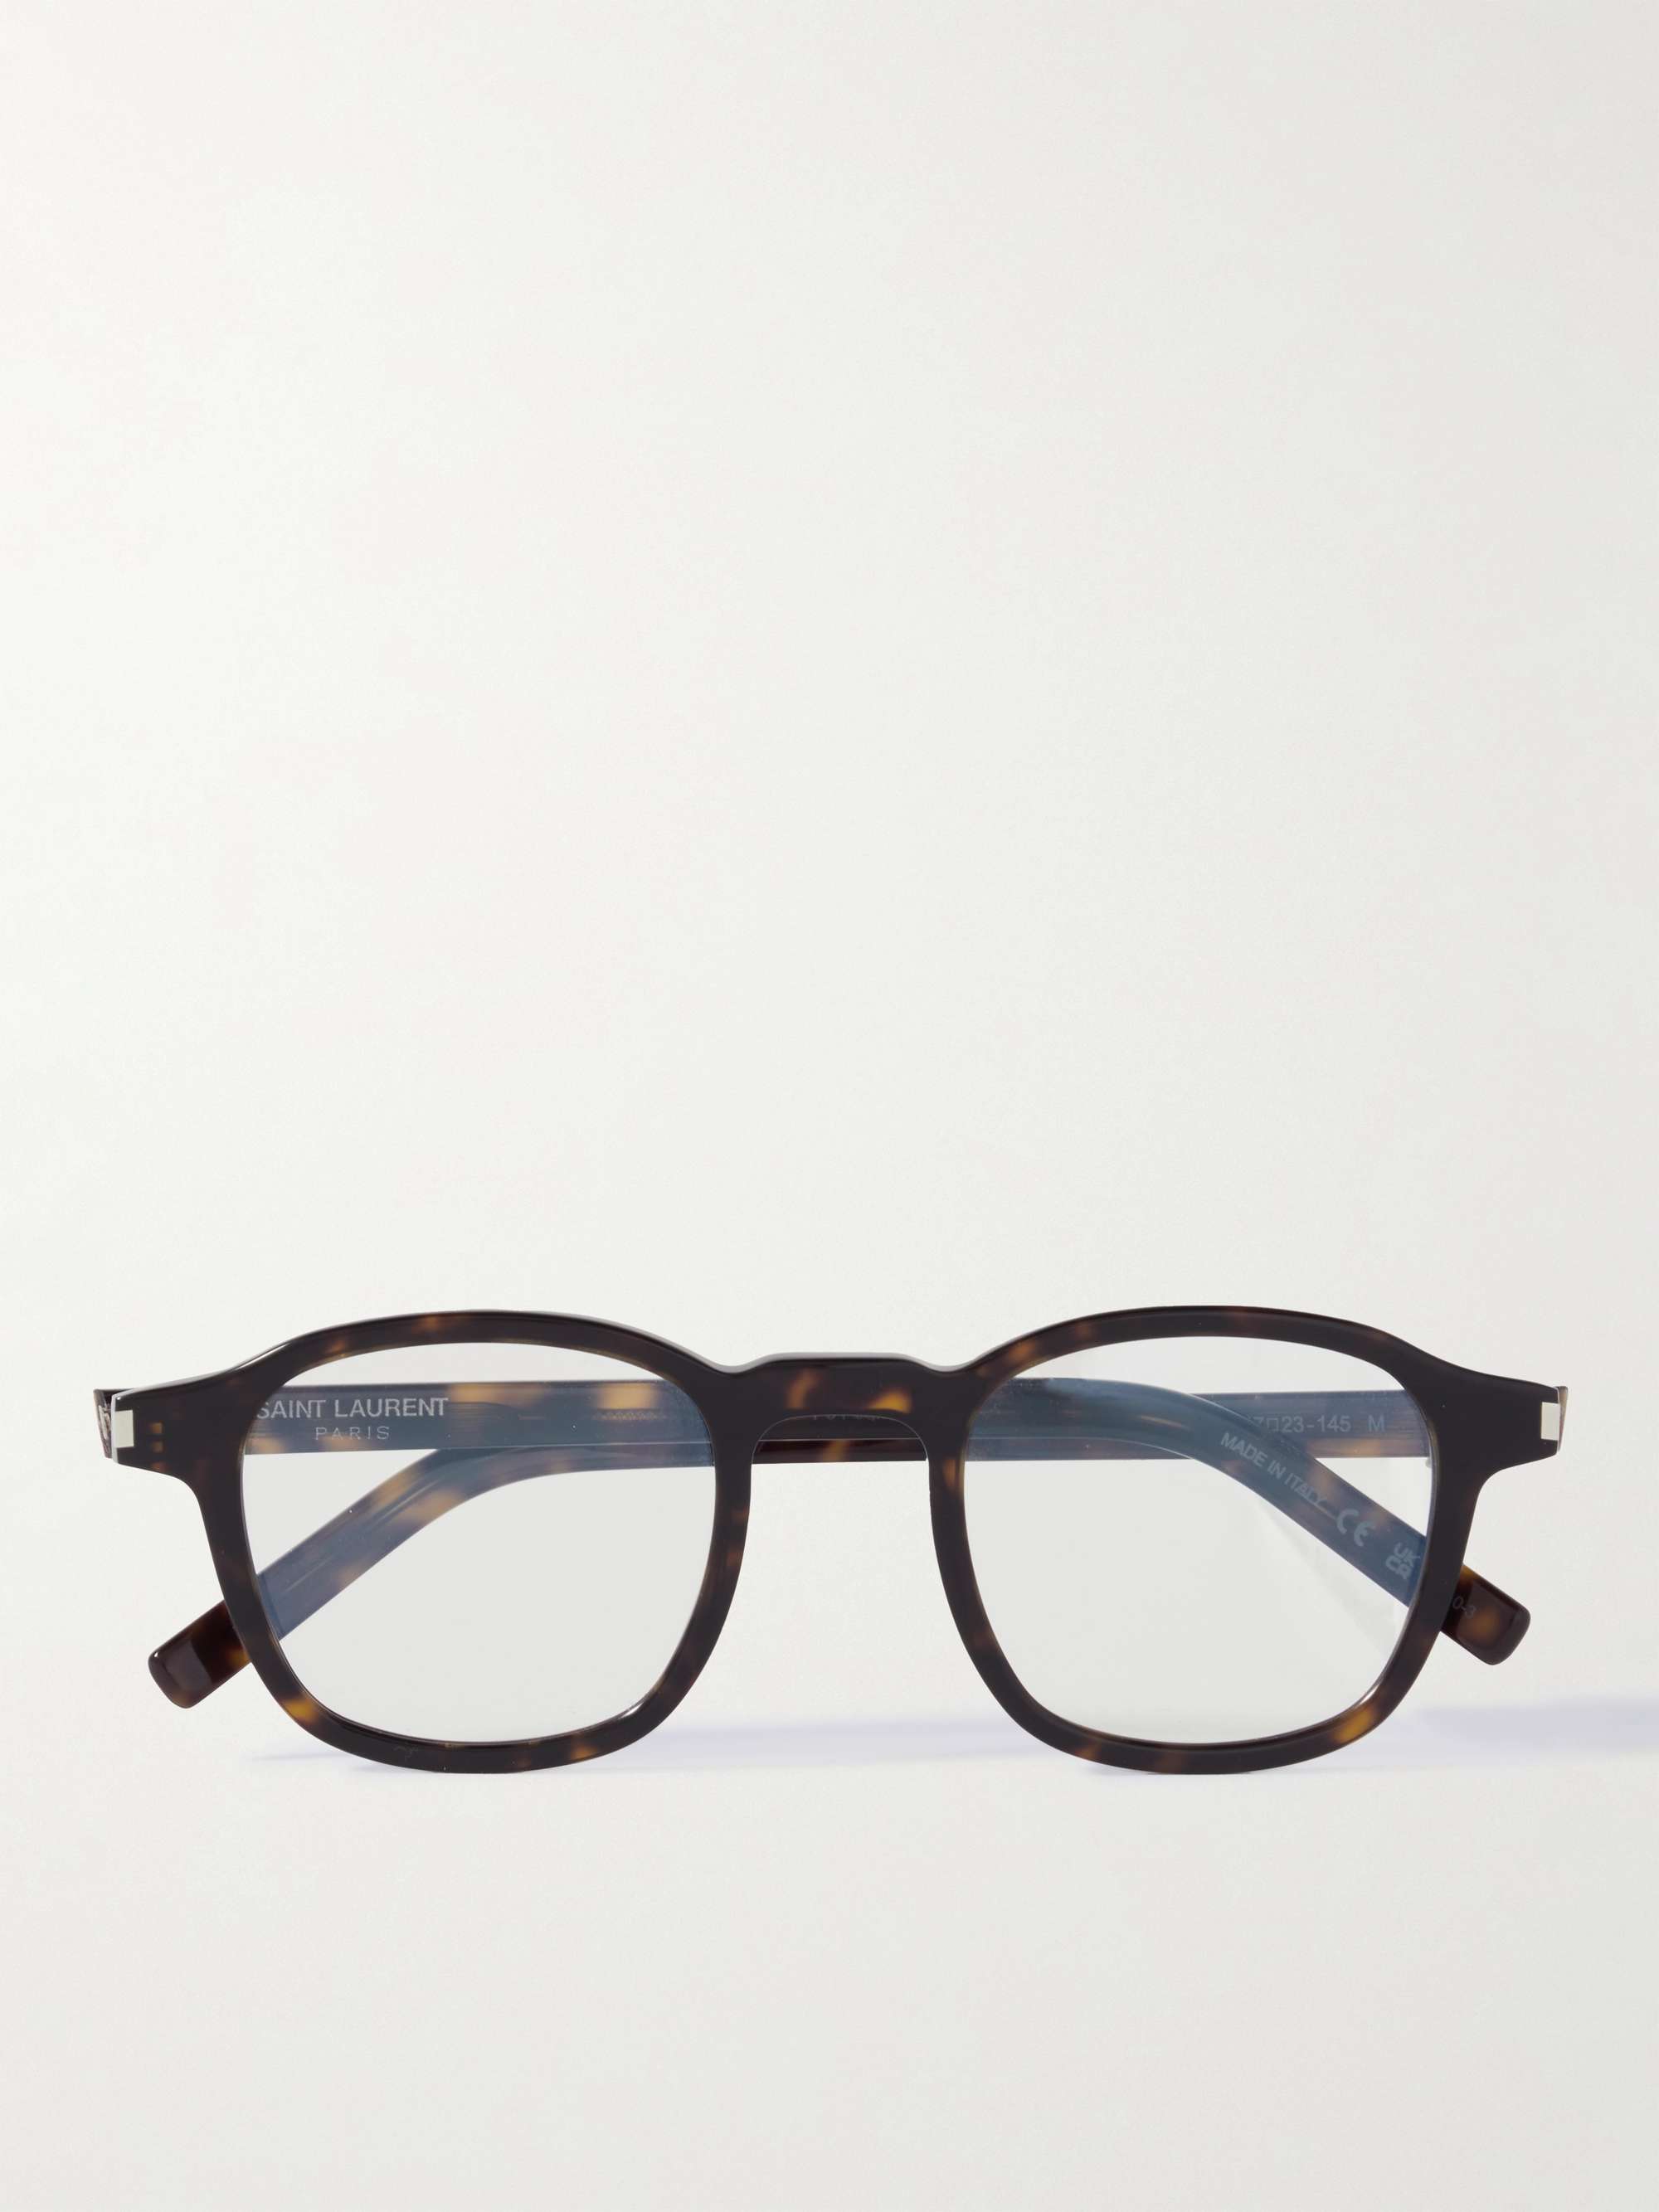 SAINT LAURENT EYEWEAR Round-Frame Tortoiseshell Acetate Optical Glasses | MR  PORTER